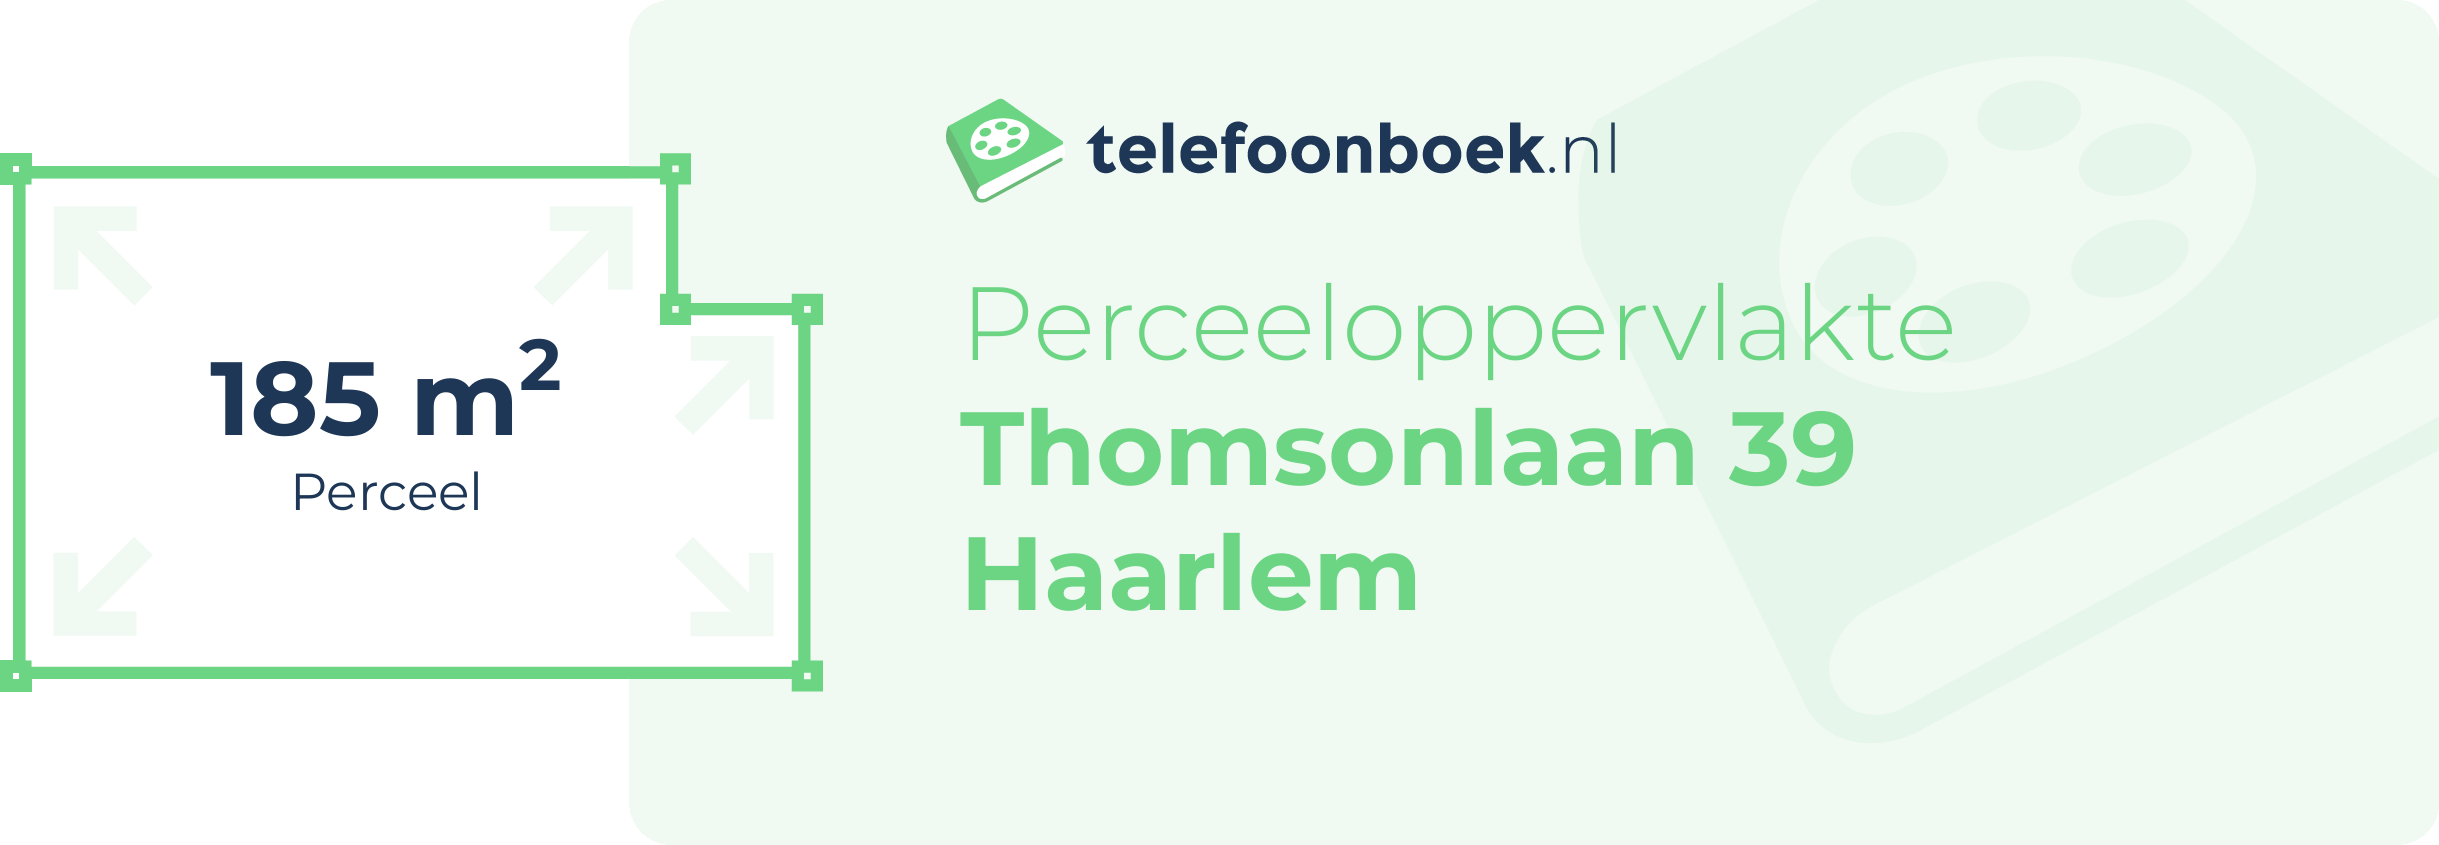 Perceeloppervlakte Thomsonlaan 39 Haarlem